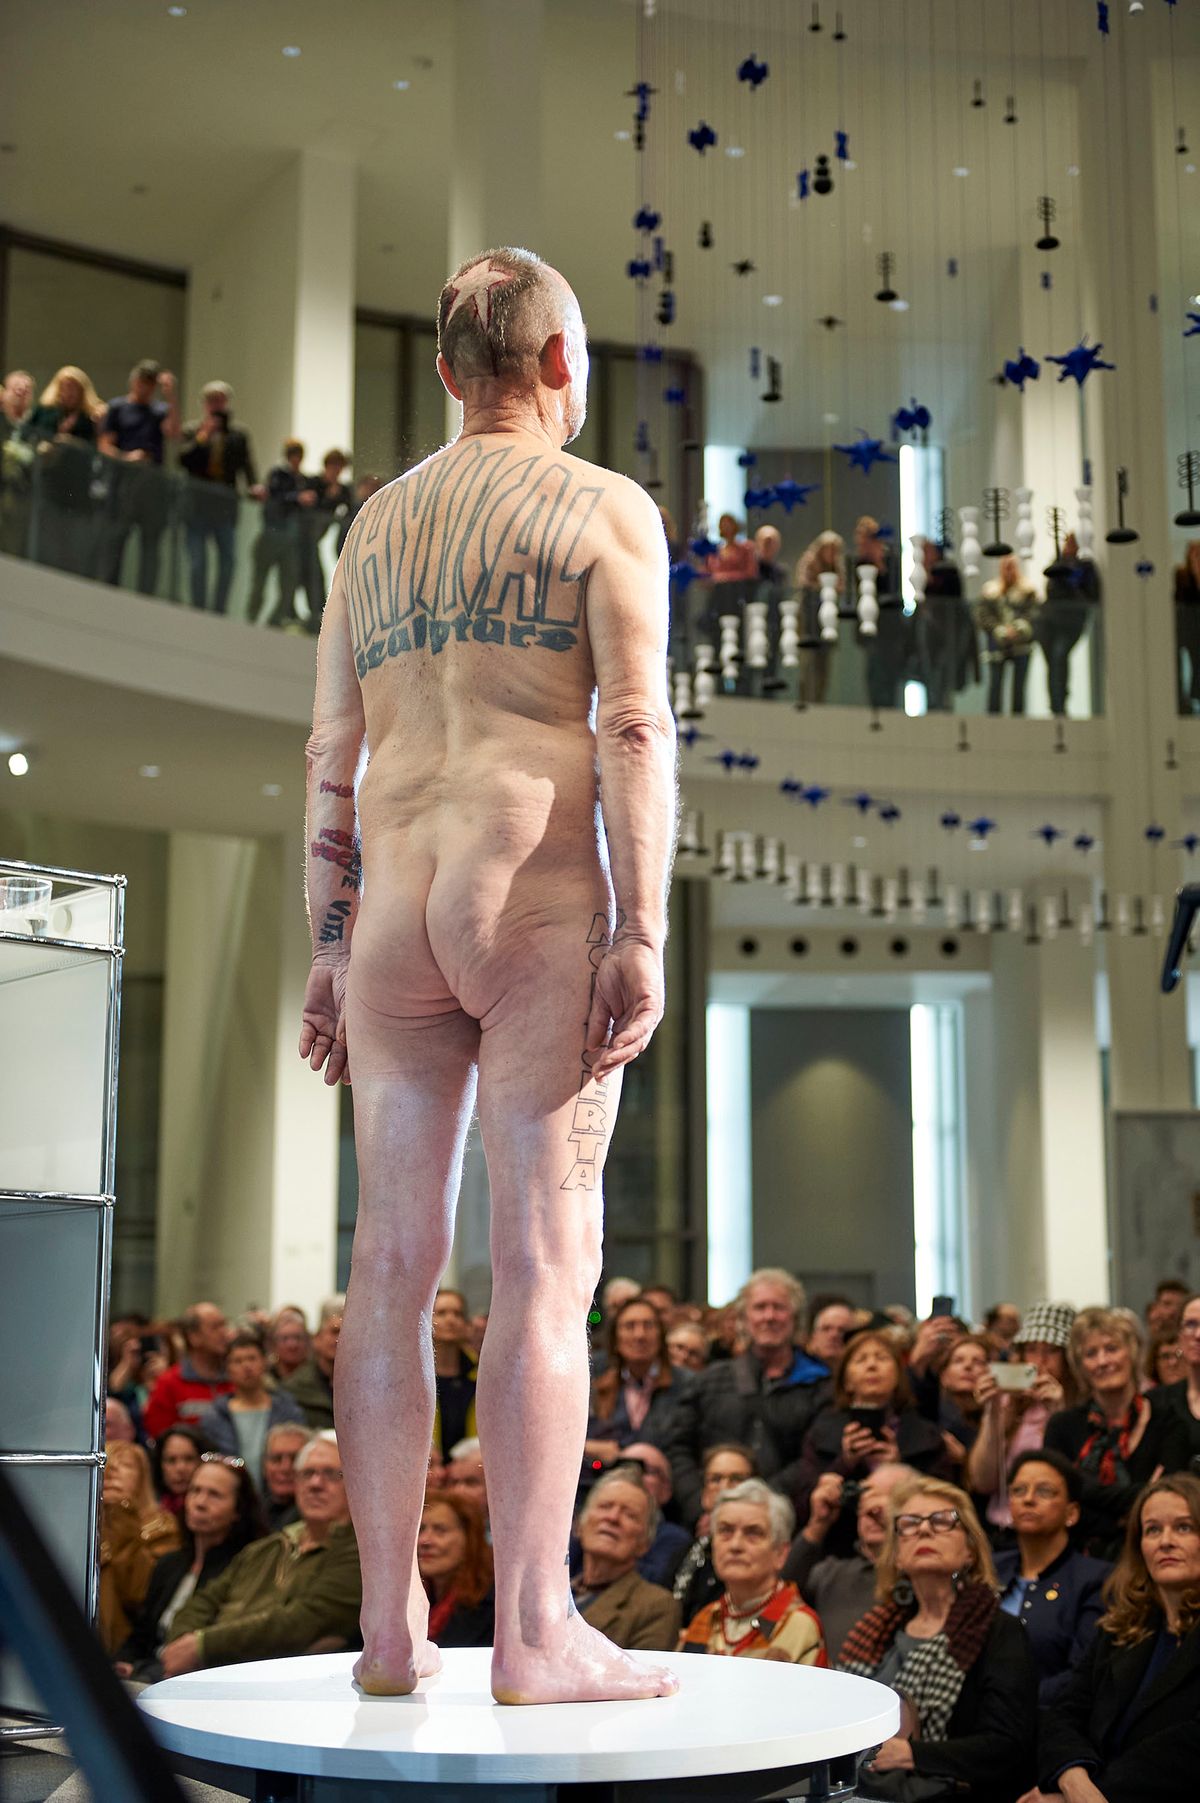 Wolfgang Flatz displays his tattoos at the Pinakothek der Moderne in Munich

© Franziska Pietsch/Pinakothek der Moderne